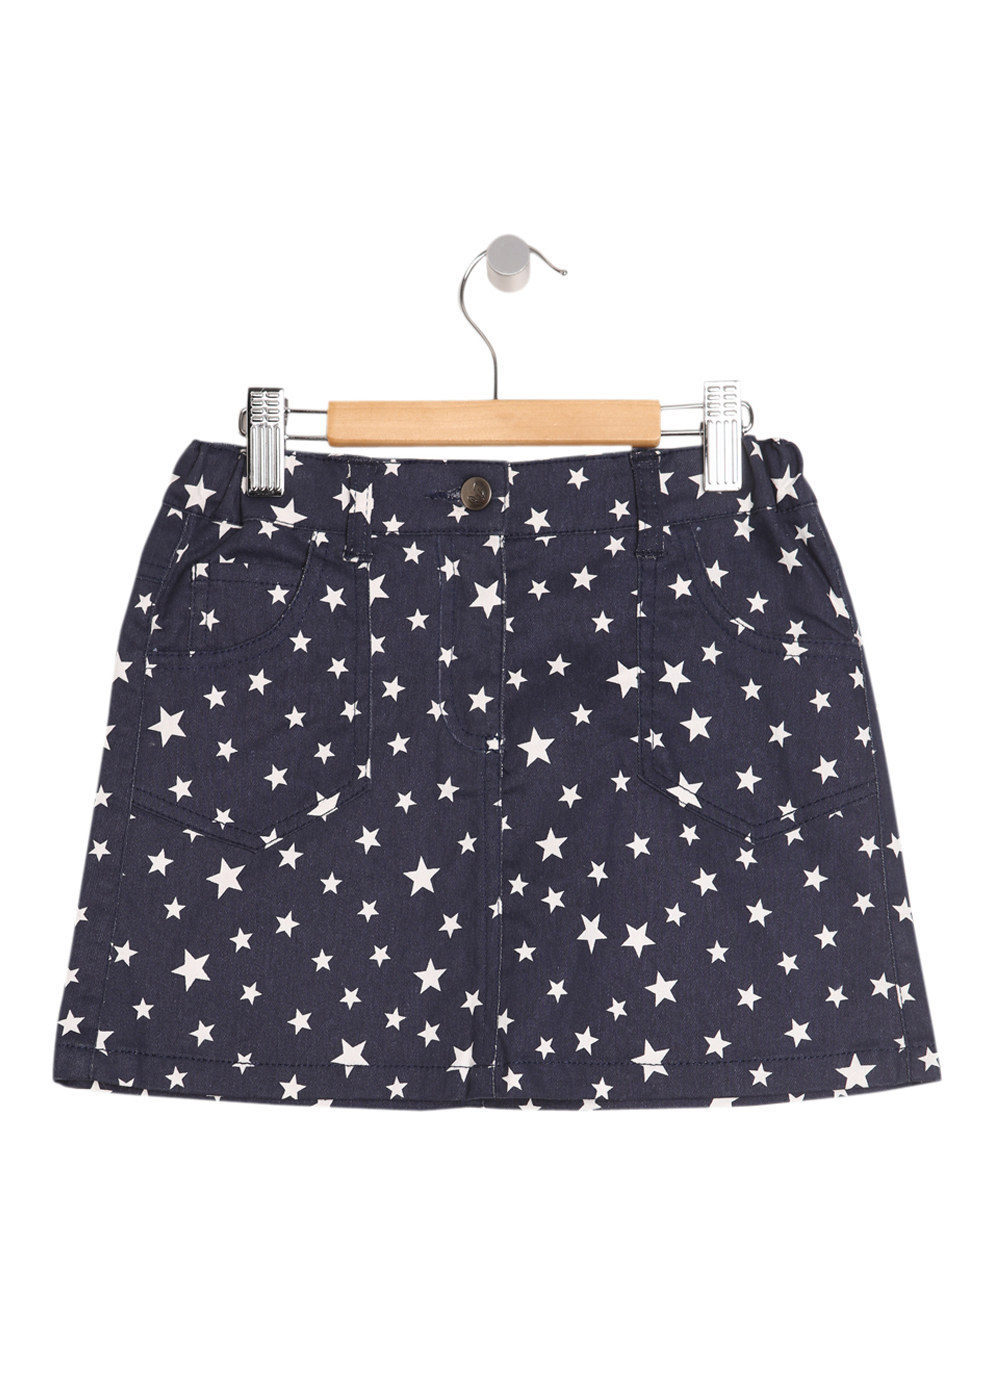 Girls Blue and White Star Print Denim Mini Skirt